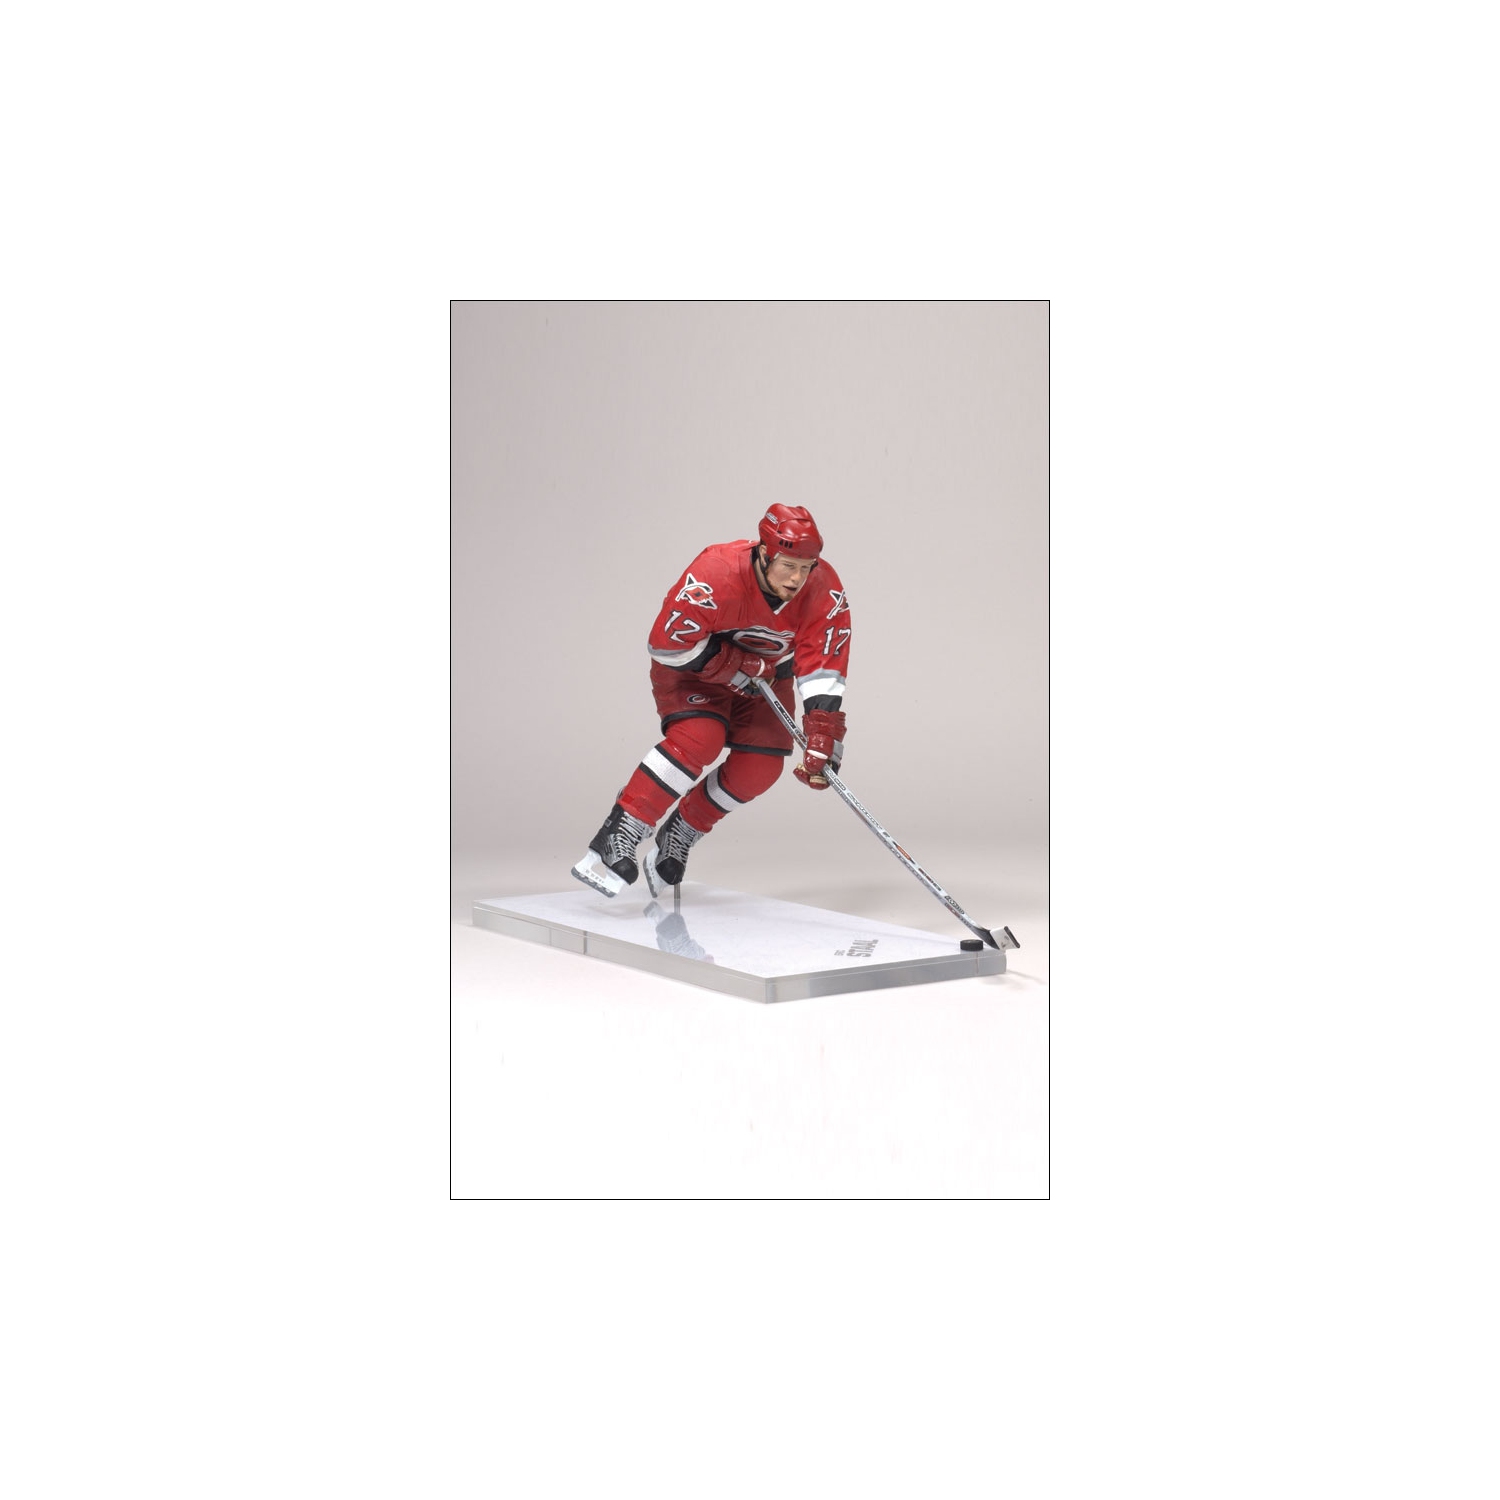 NHL Sportspicks Series 15 Eric Staal (Carolina Hurricanes) Red Jersey